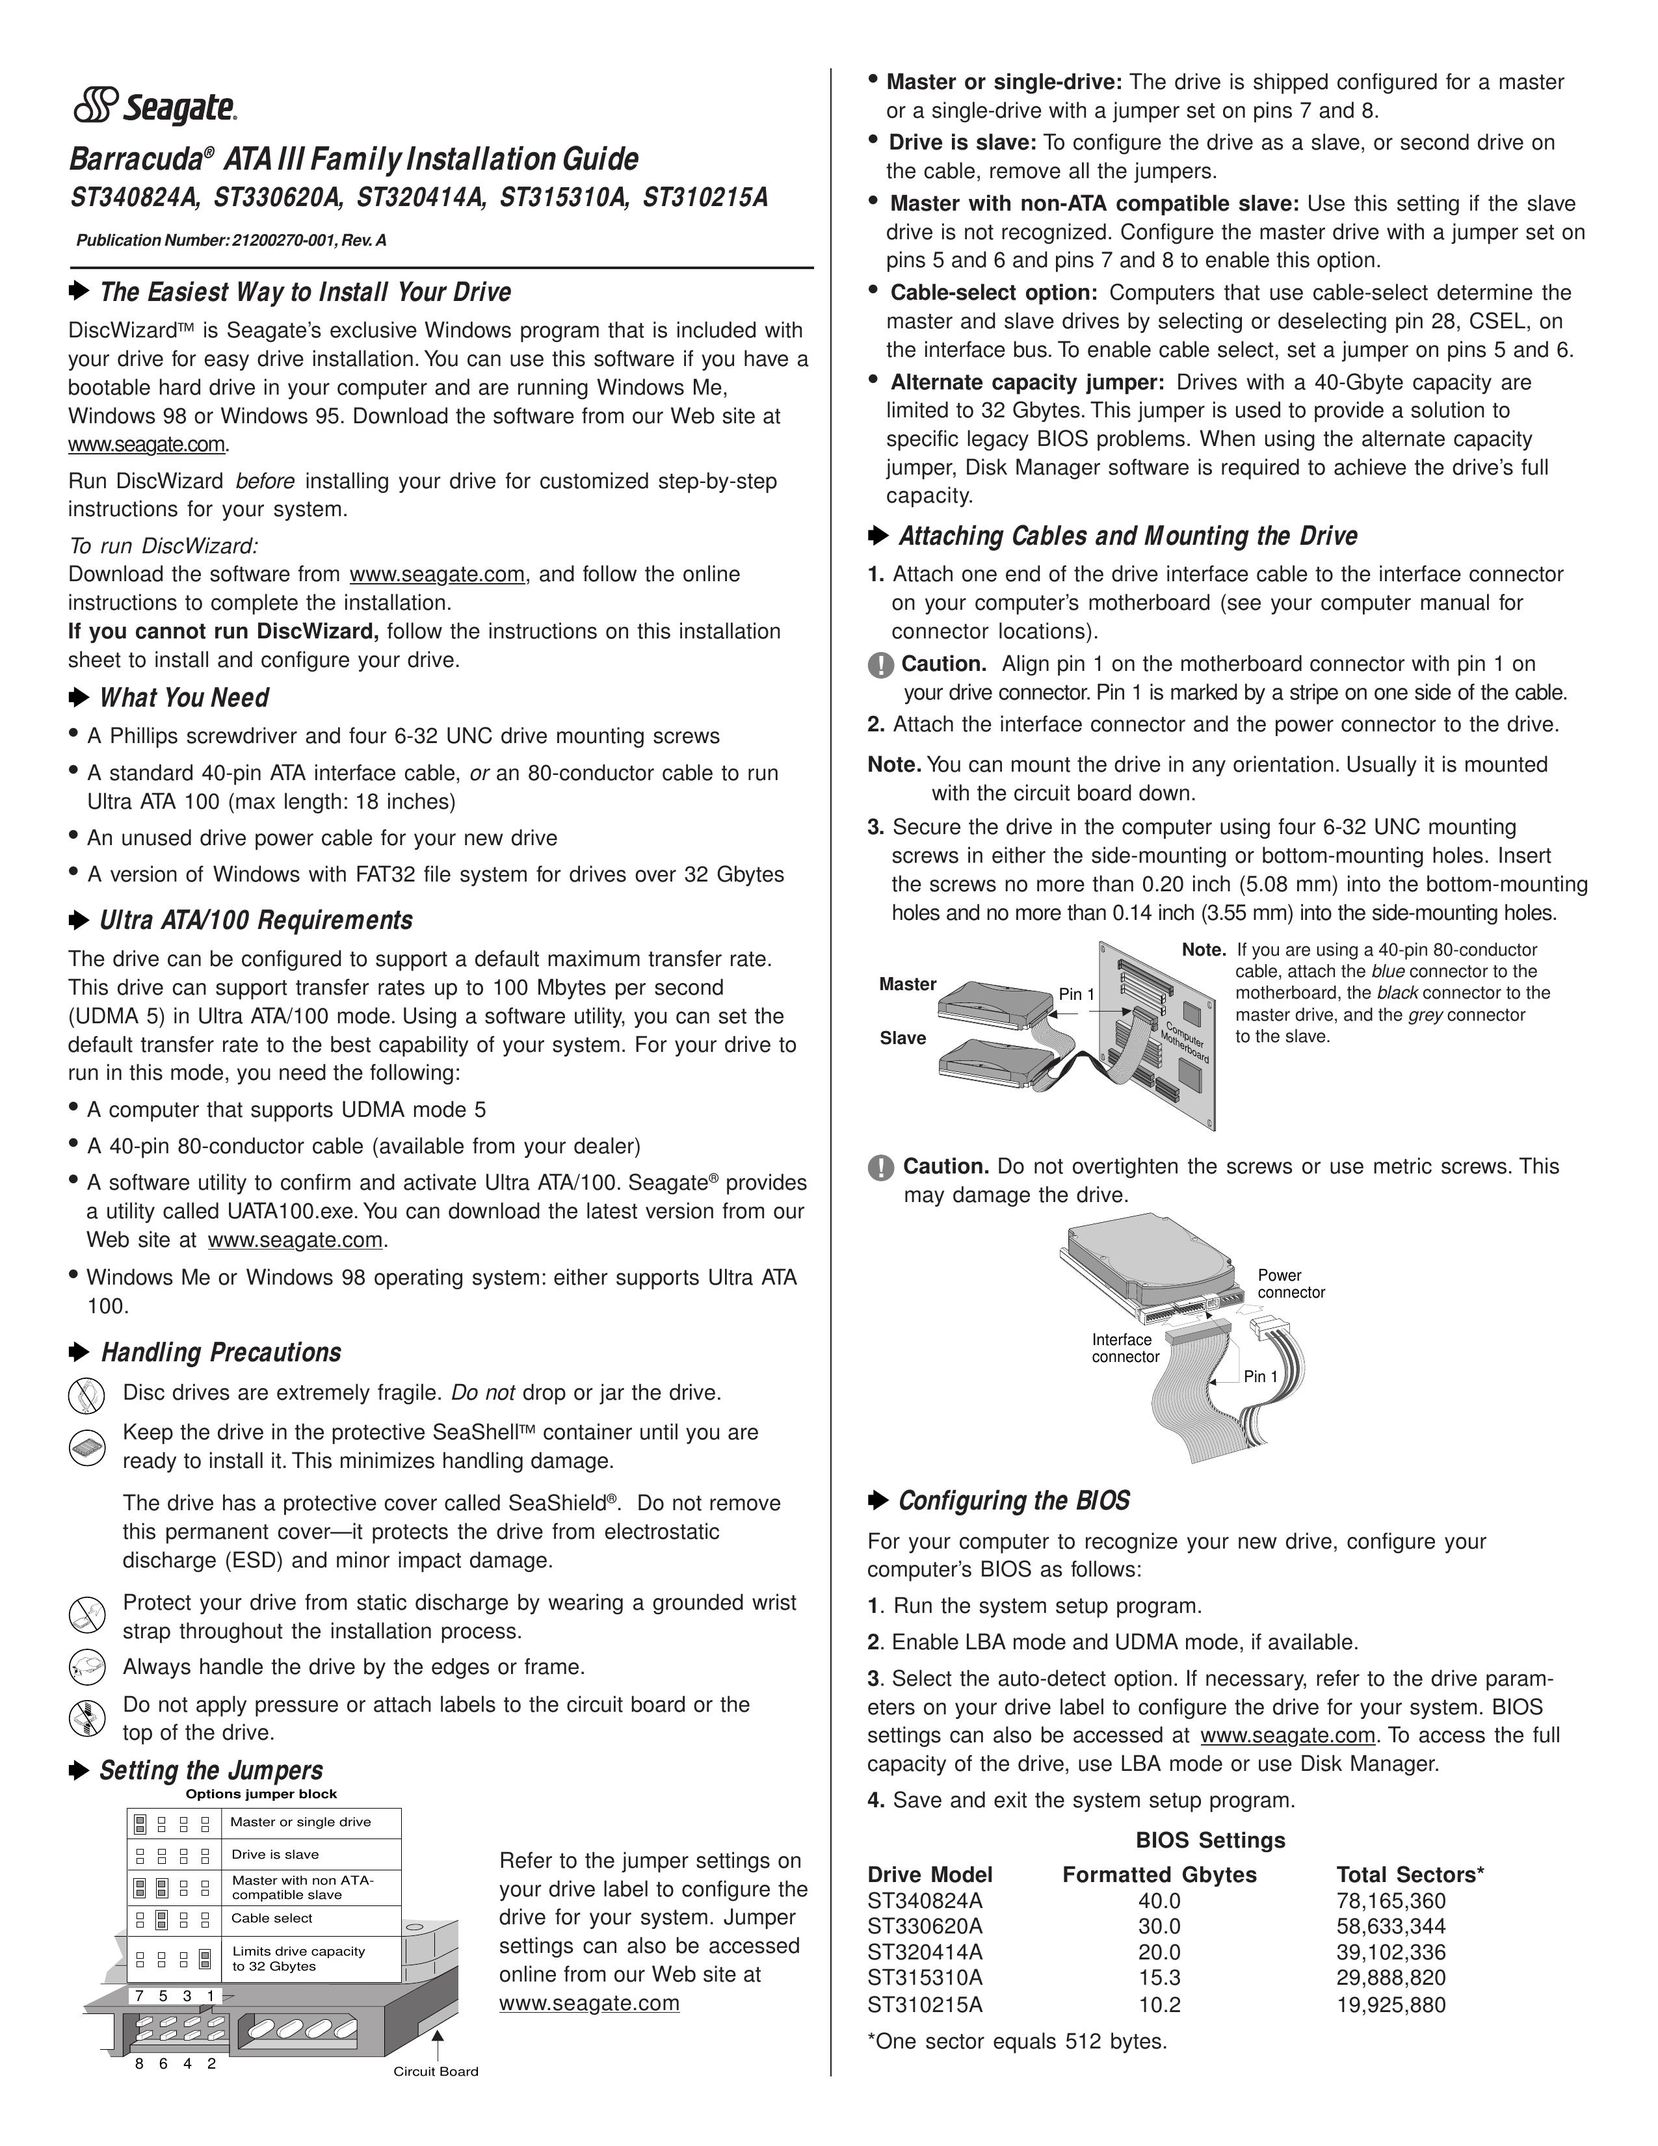 Barracuda Networks ST315310A Computer Drive User Manual